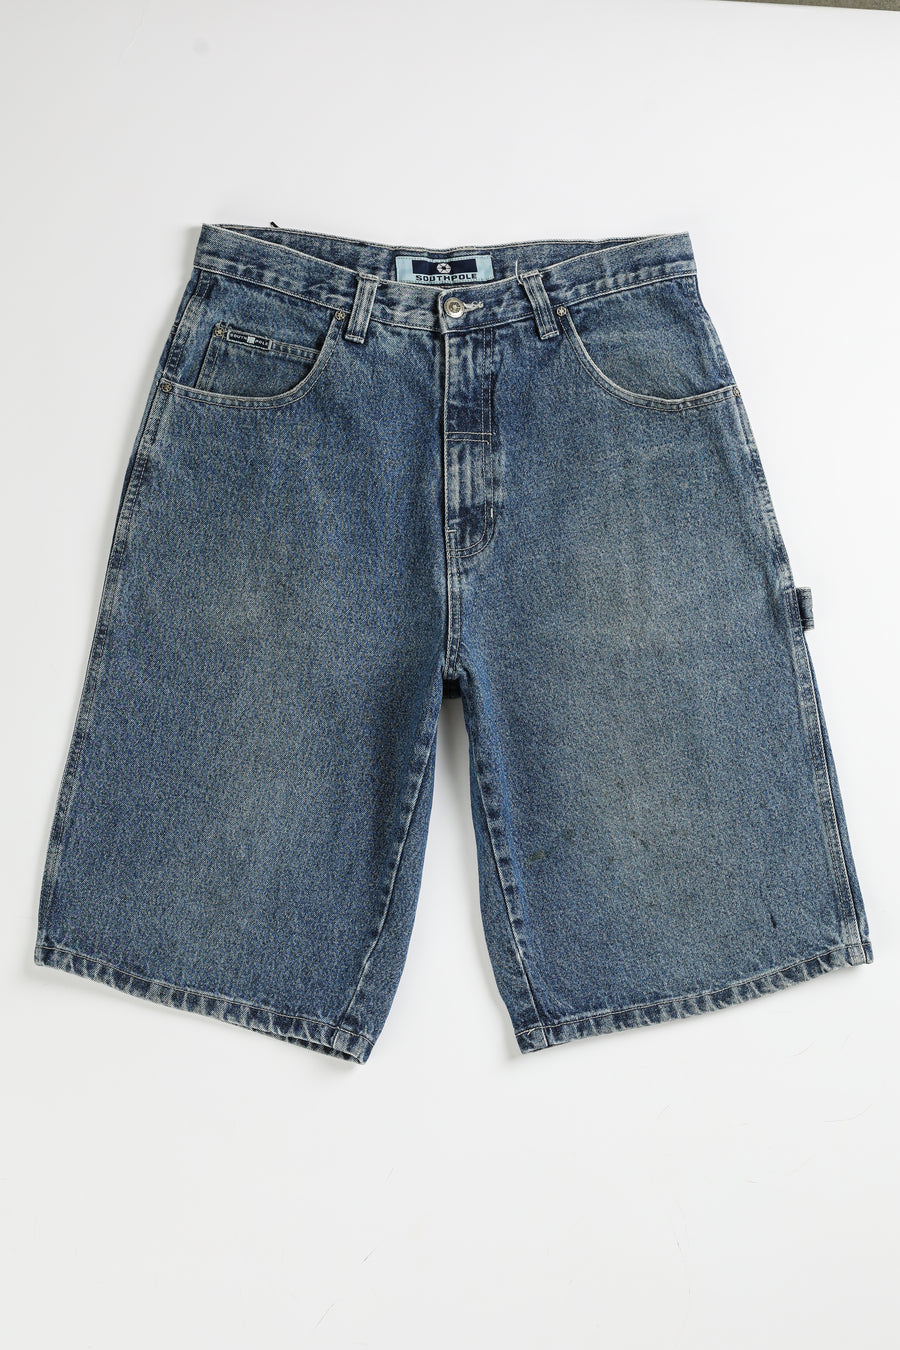 Vintage South Pole Denim Shorts - W34